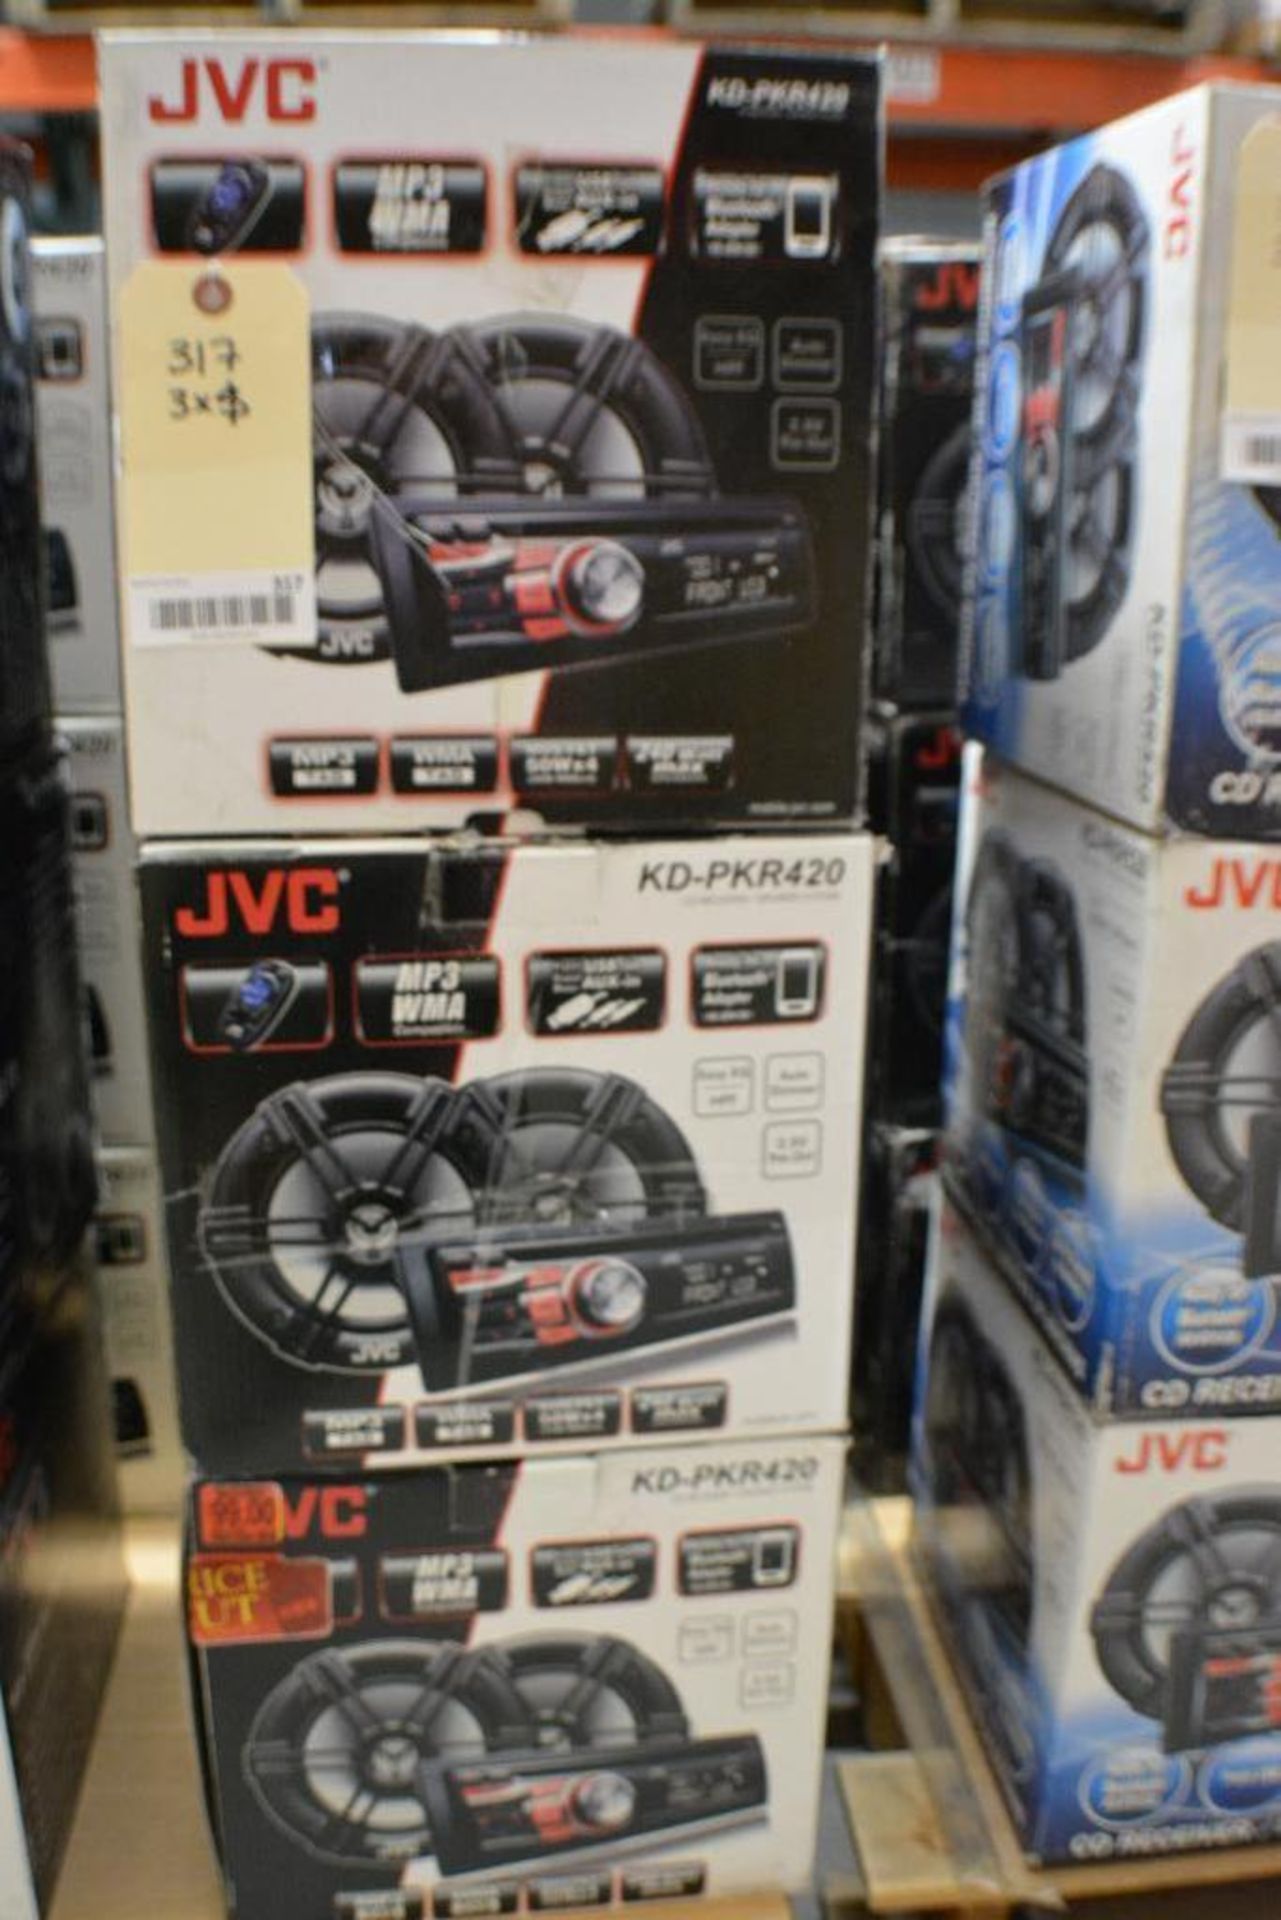 JVC Car Stereo Model KD-PKR420 In-Dash Receiver/Speaker System. MP3 WMA Compatible + Front/Rear USB/